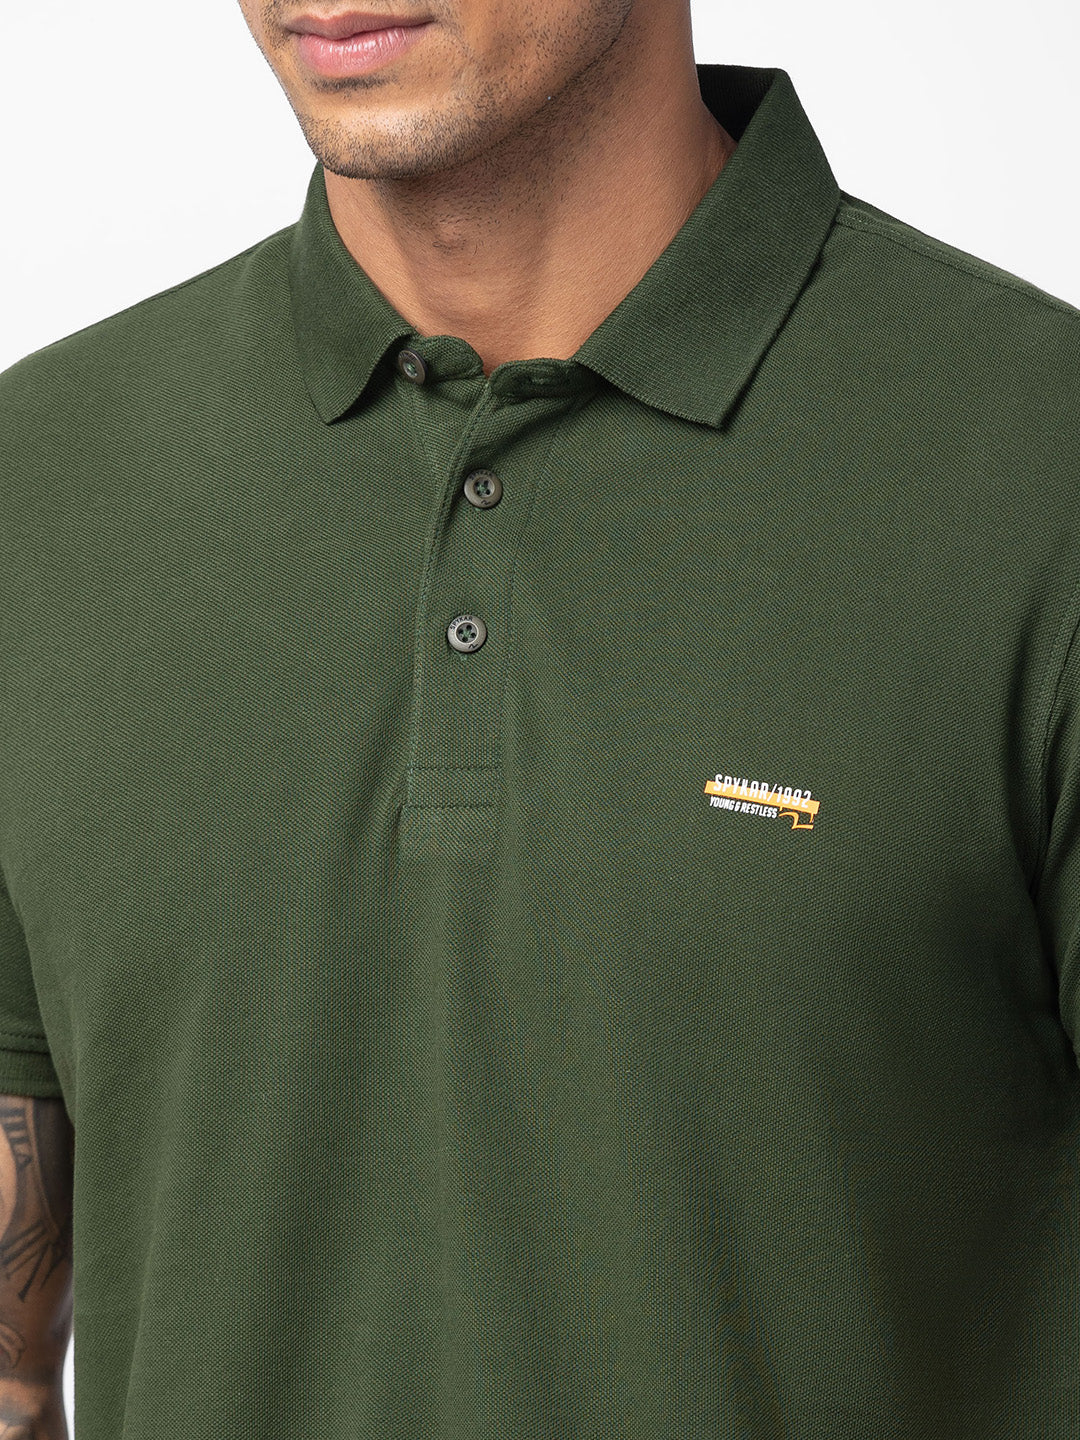 Spykar Men Rifle Green Cotton Regular Fit Half Sleeve Plain Polo T-Shirt